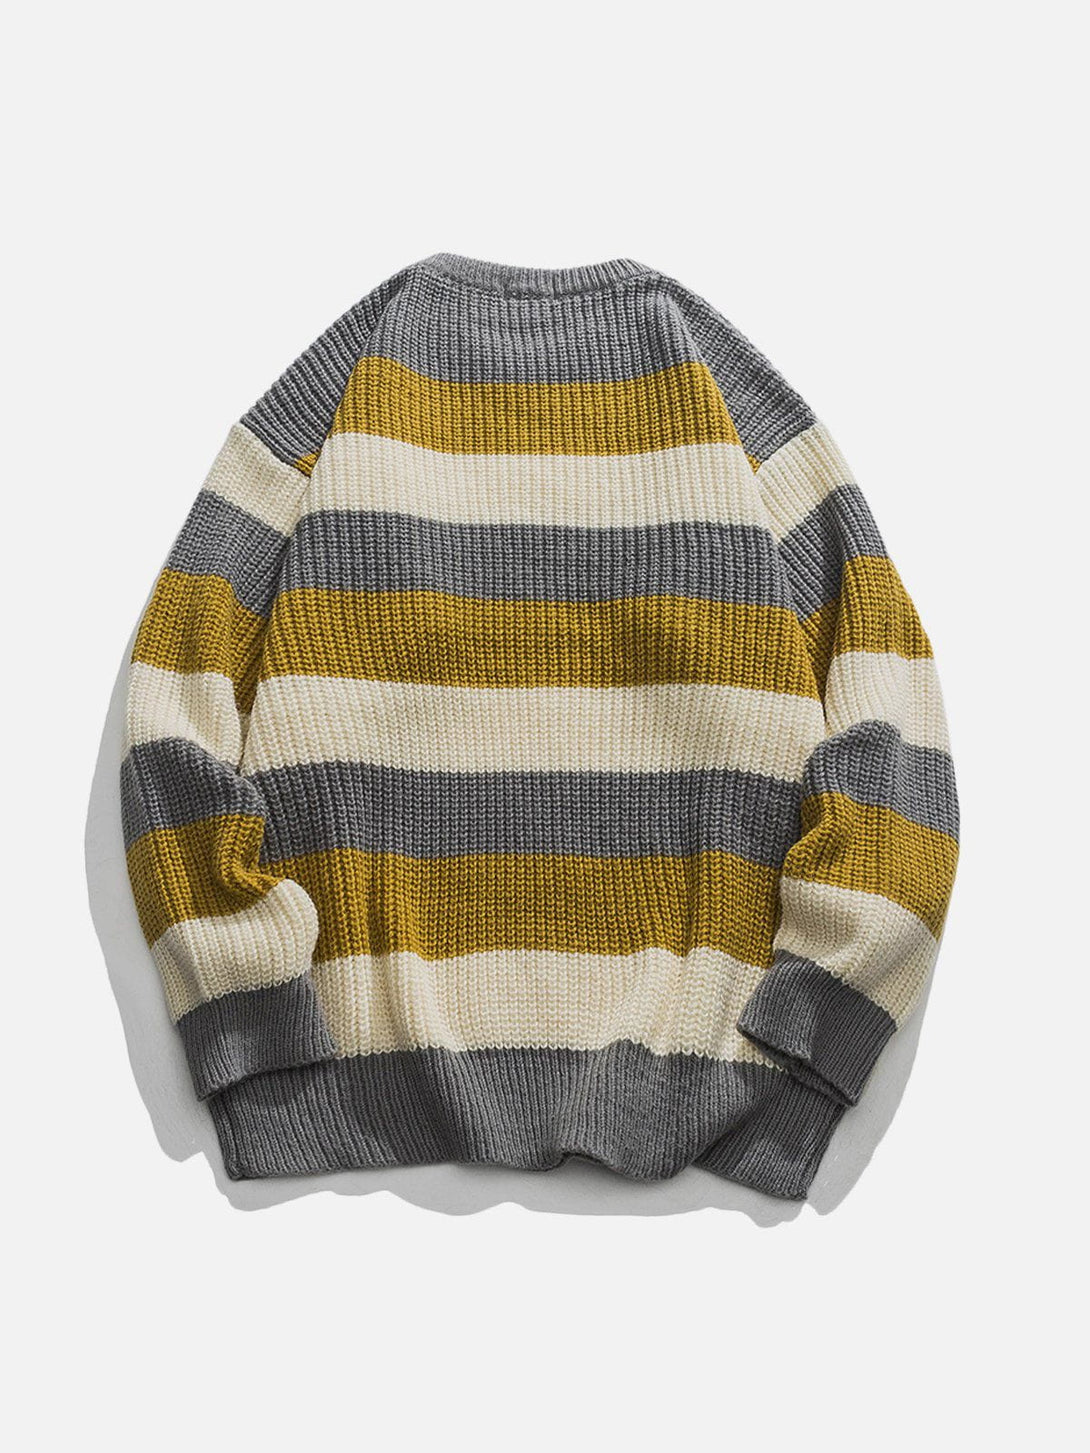 Levefly - Stripe Patchwork Sweater - Streetwear Fashion - levefly.com